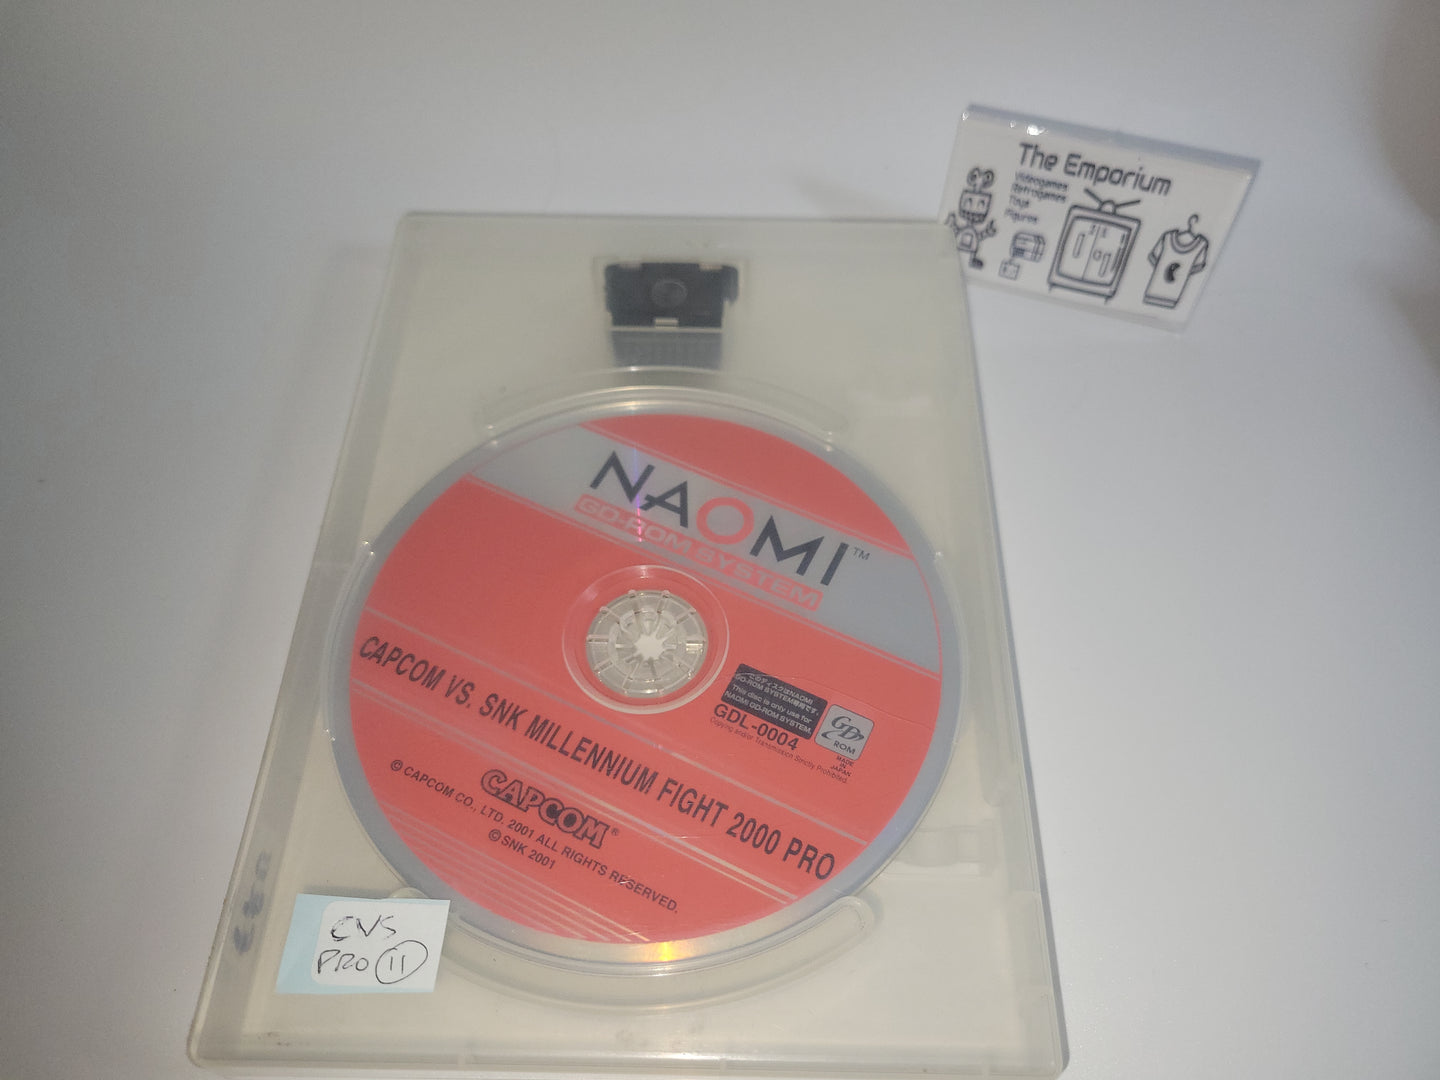 Capcom vs. SNK Millennium Fight 2000 Pro (Gd-Rom + Dongle) - Arcade Pcb Printed Circuit Board